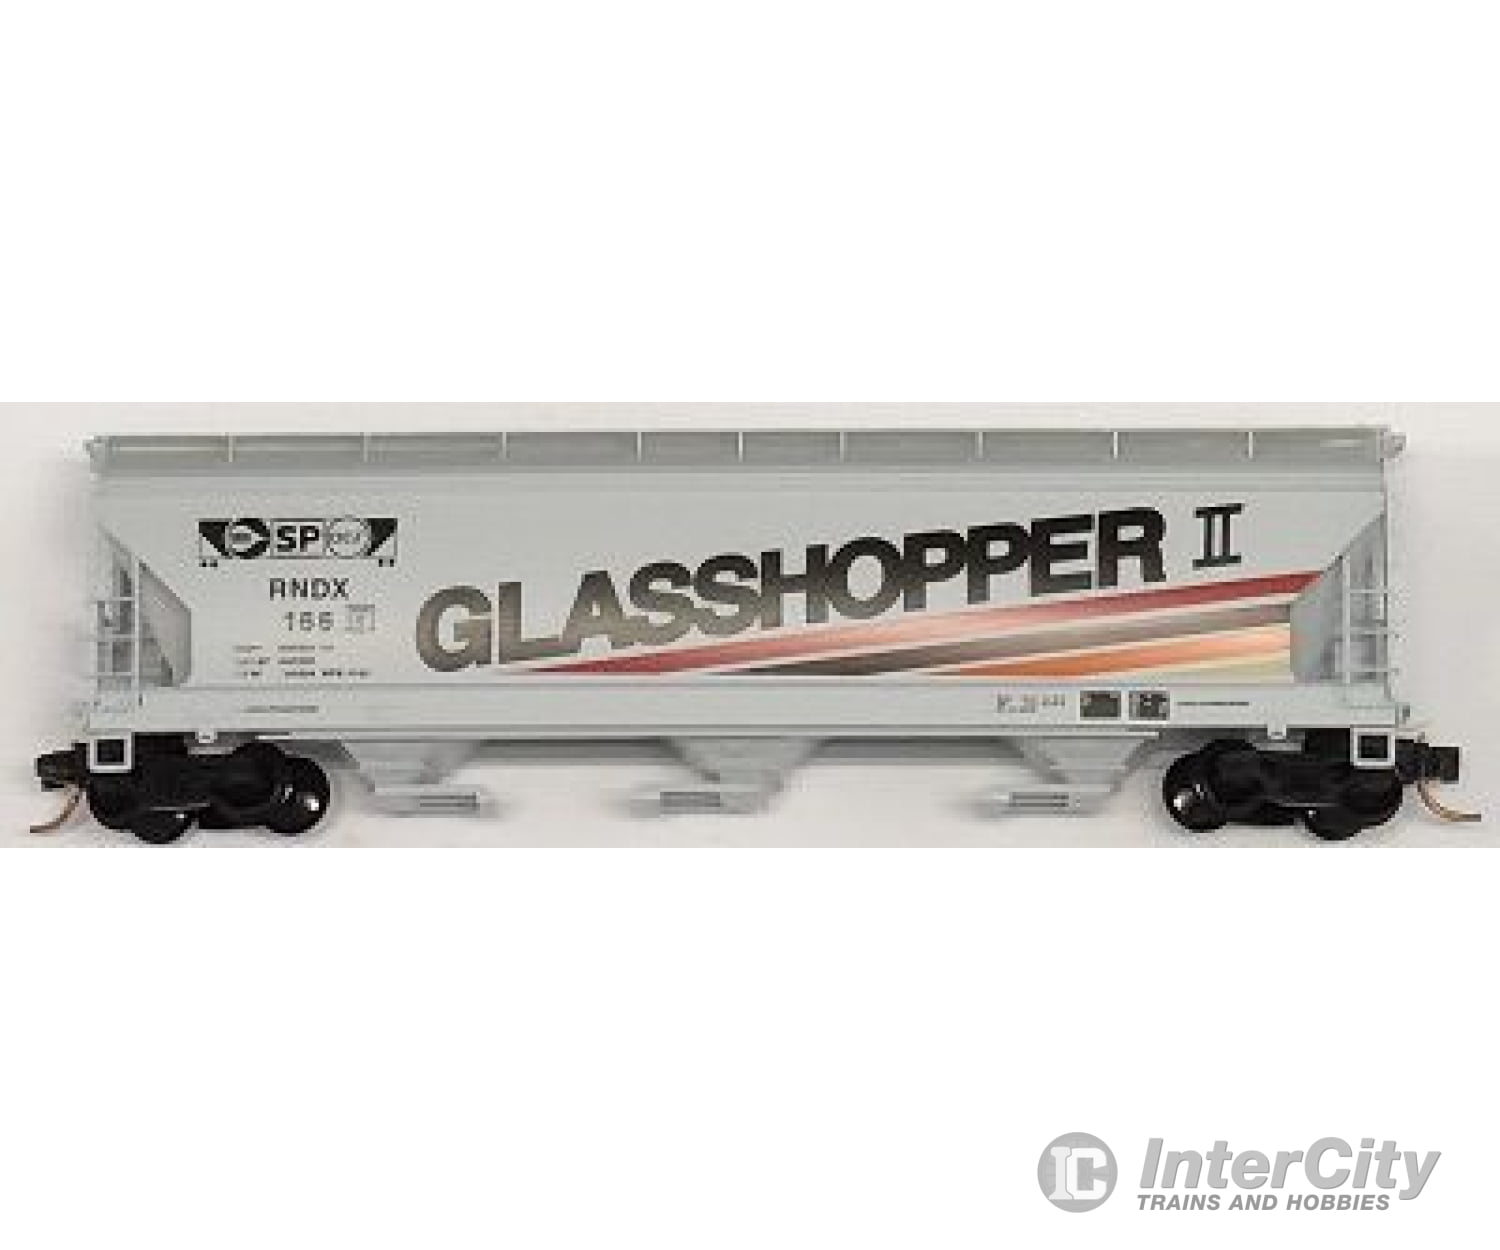 Micro Trains 09400240 N Micro-Trains Mtl #09400240 Rndx Glasshopper Ii 3-Bay Center Flow Hopper #166